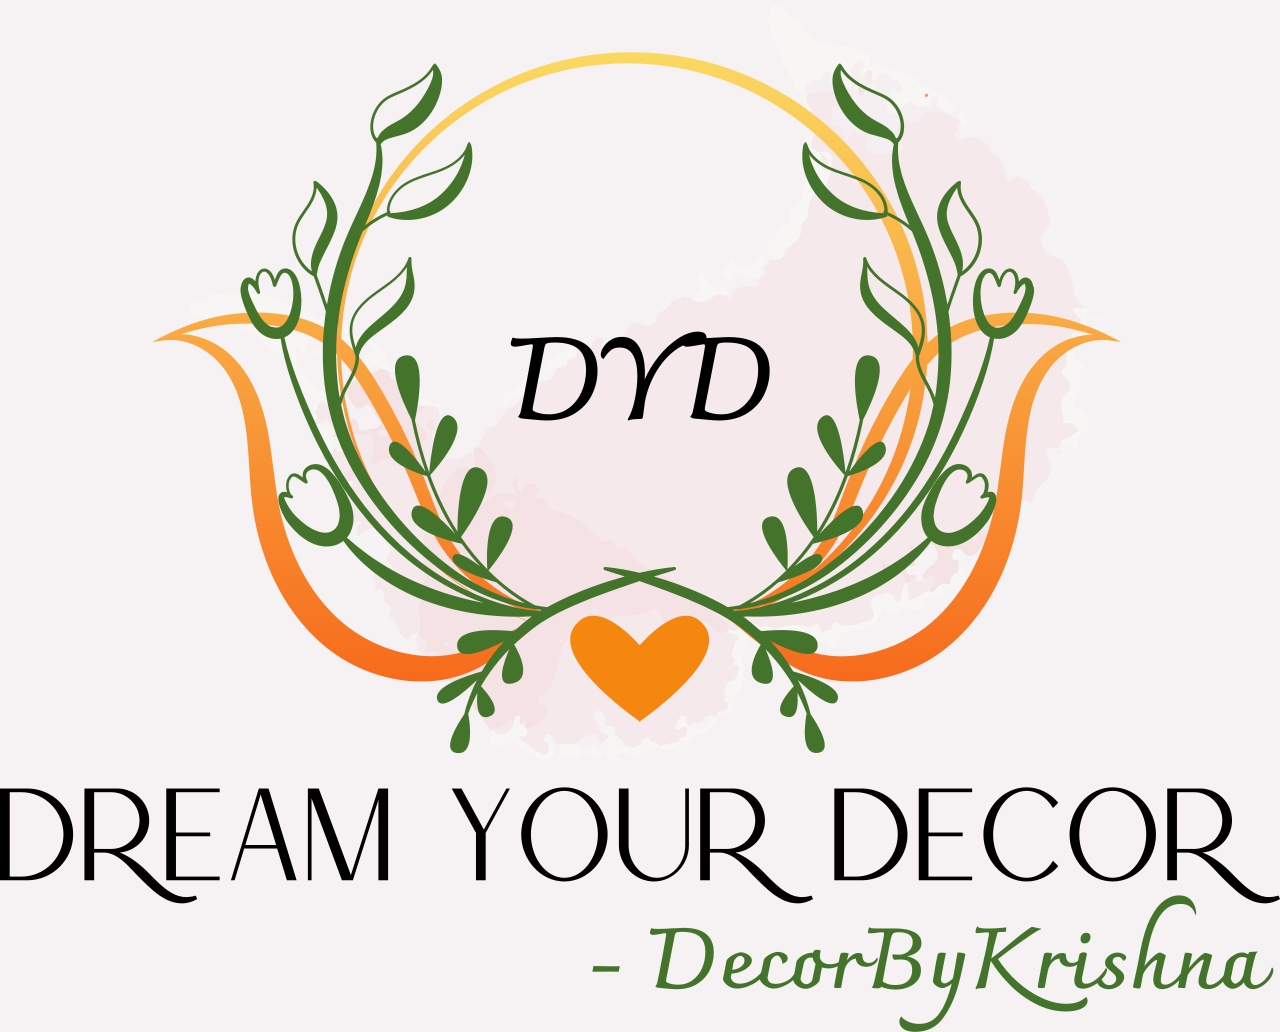 Dream Your Decor 's web page